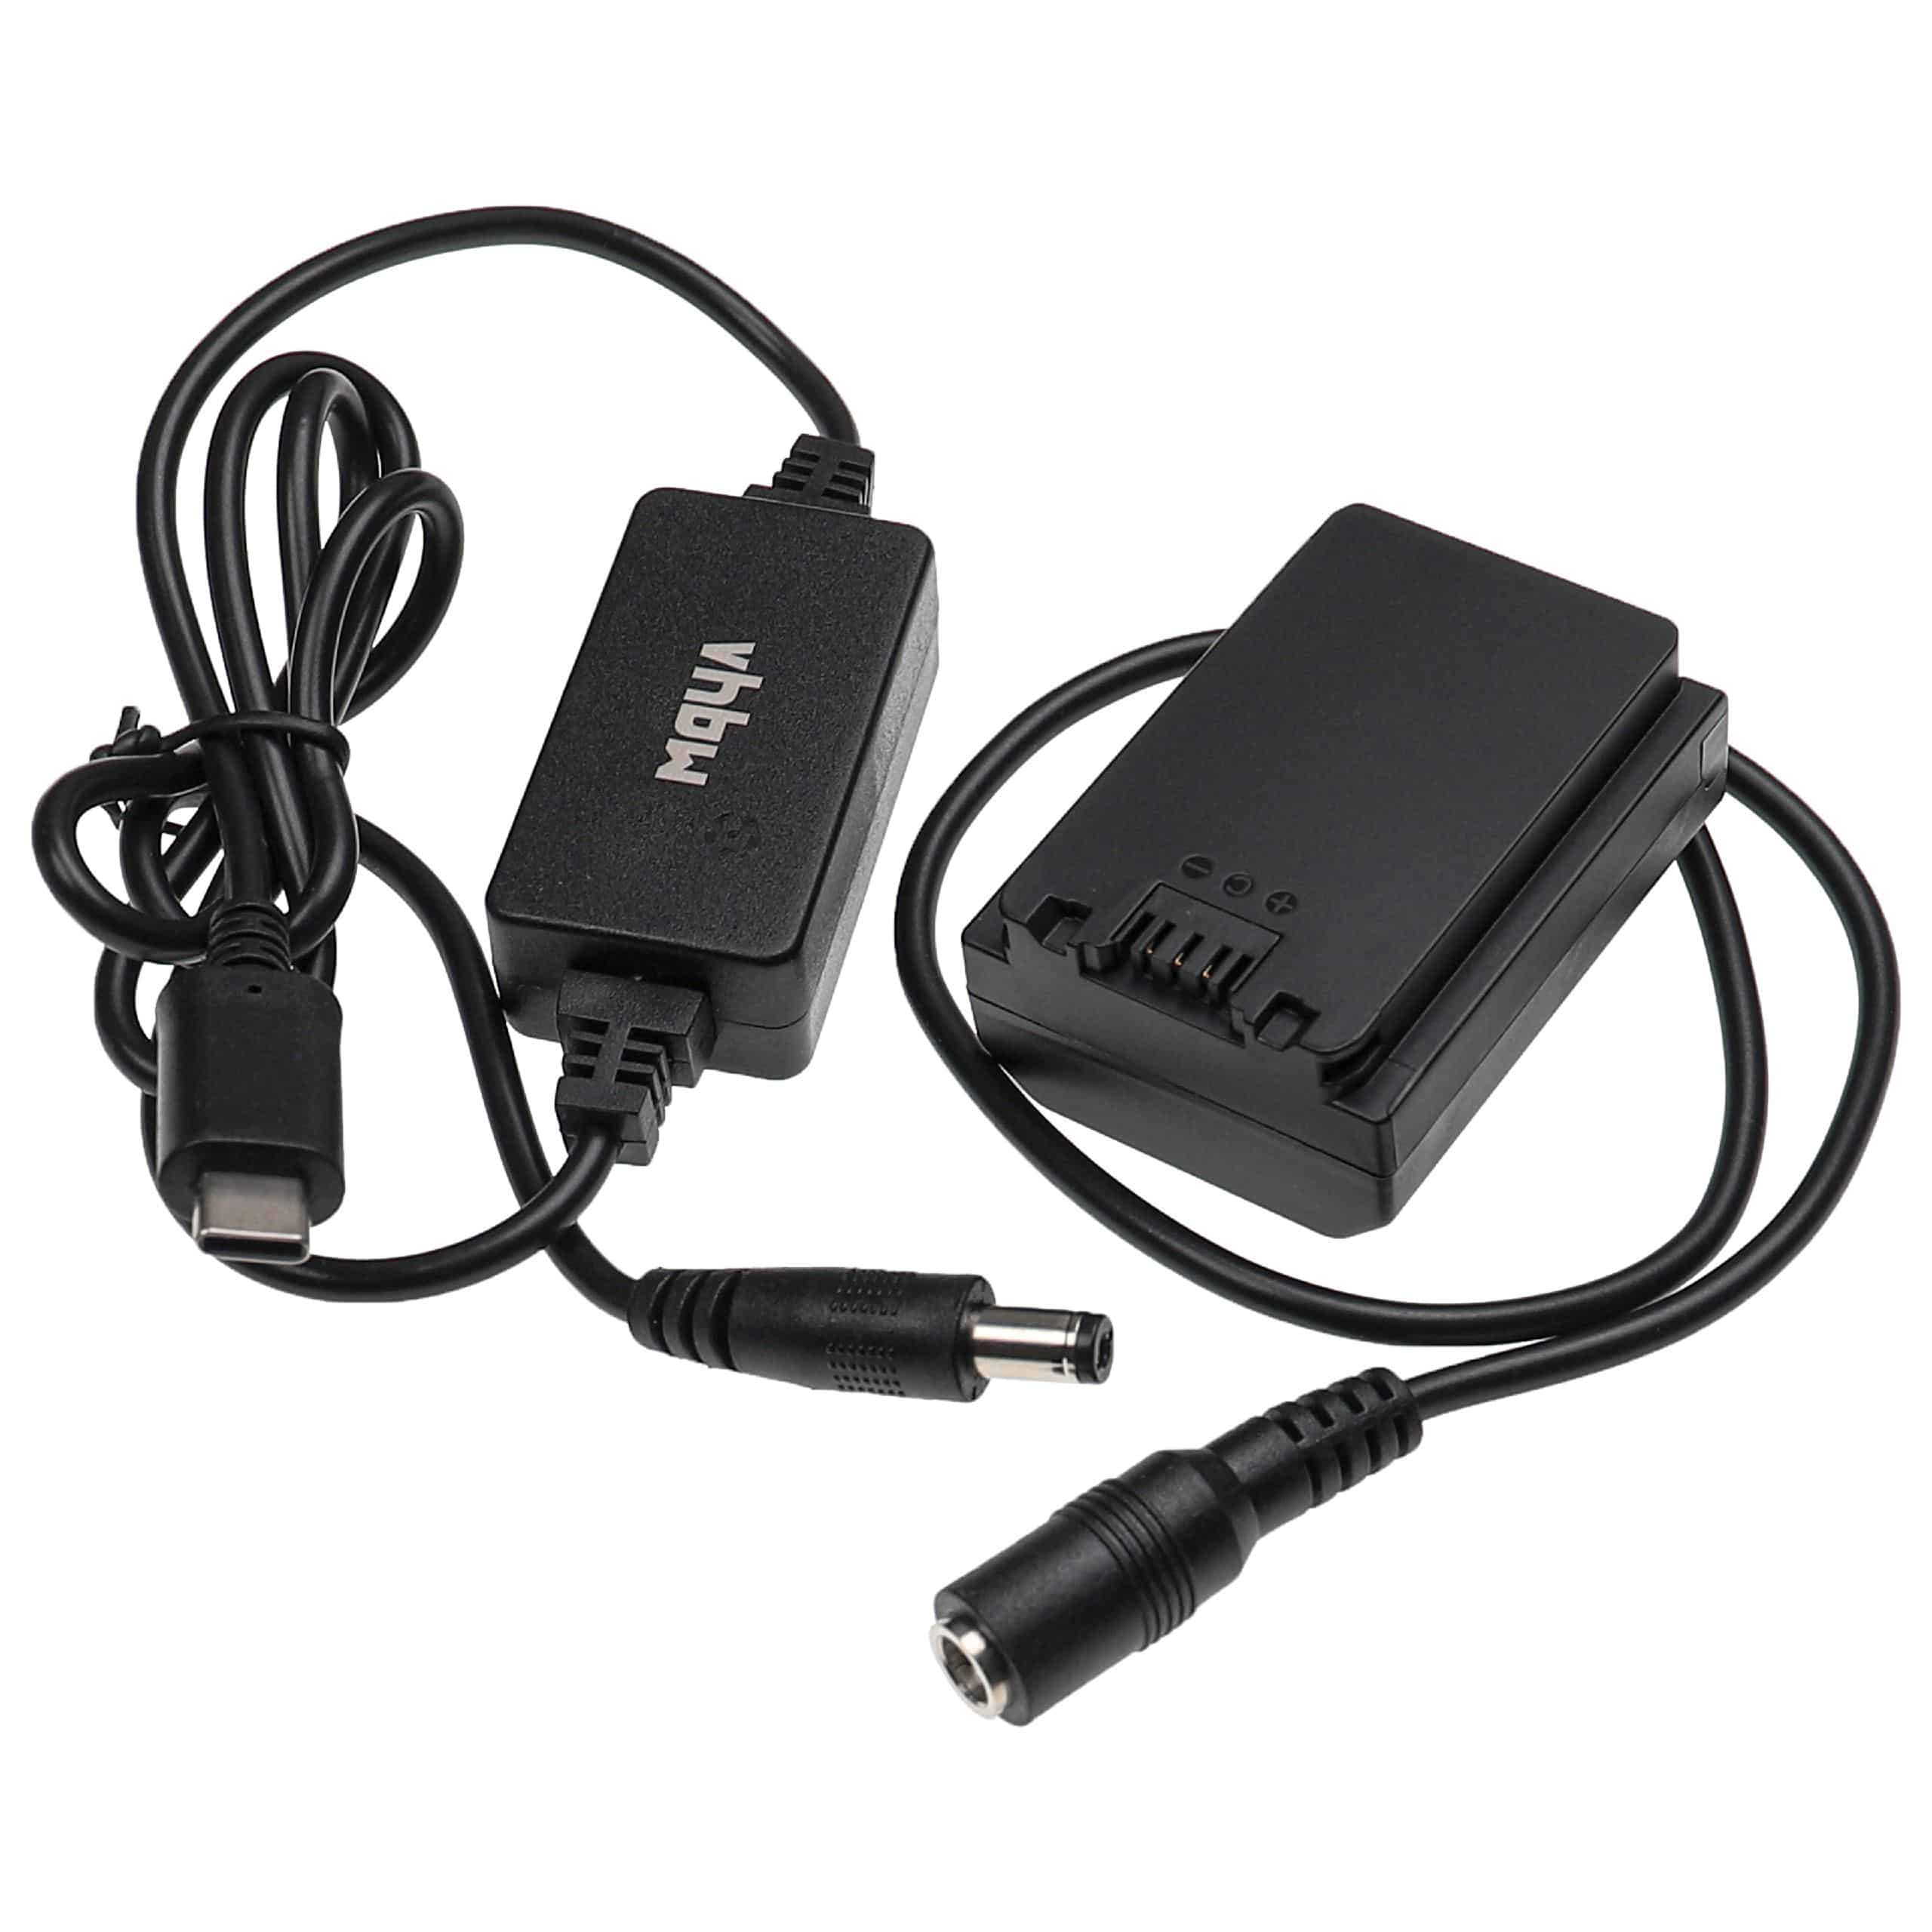 Alimentatore USB sostituisce Sony AC-FZ100 per fotocamera Sony + coupler DC come Sony NP-FZ100, 3,0A